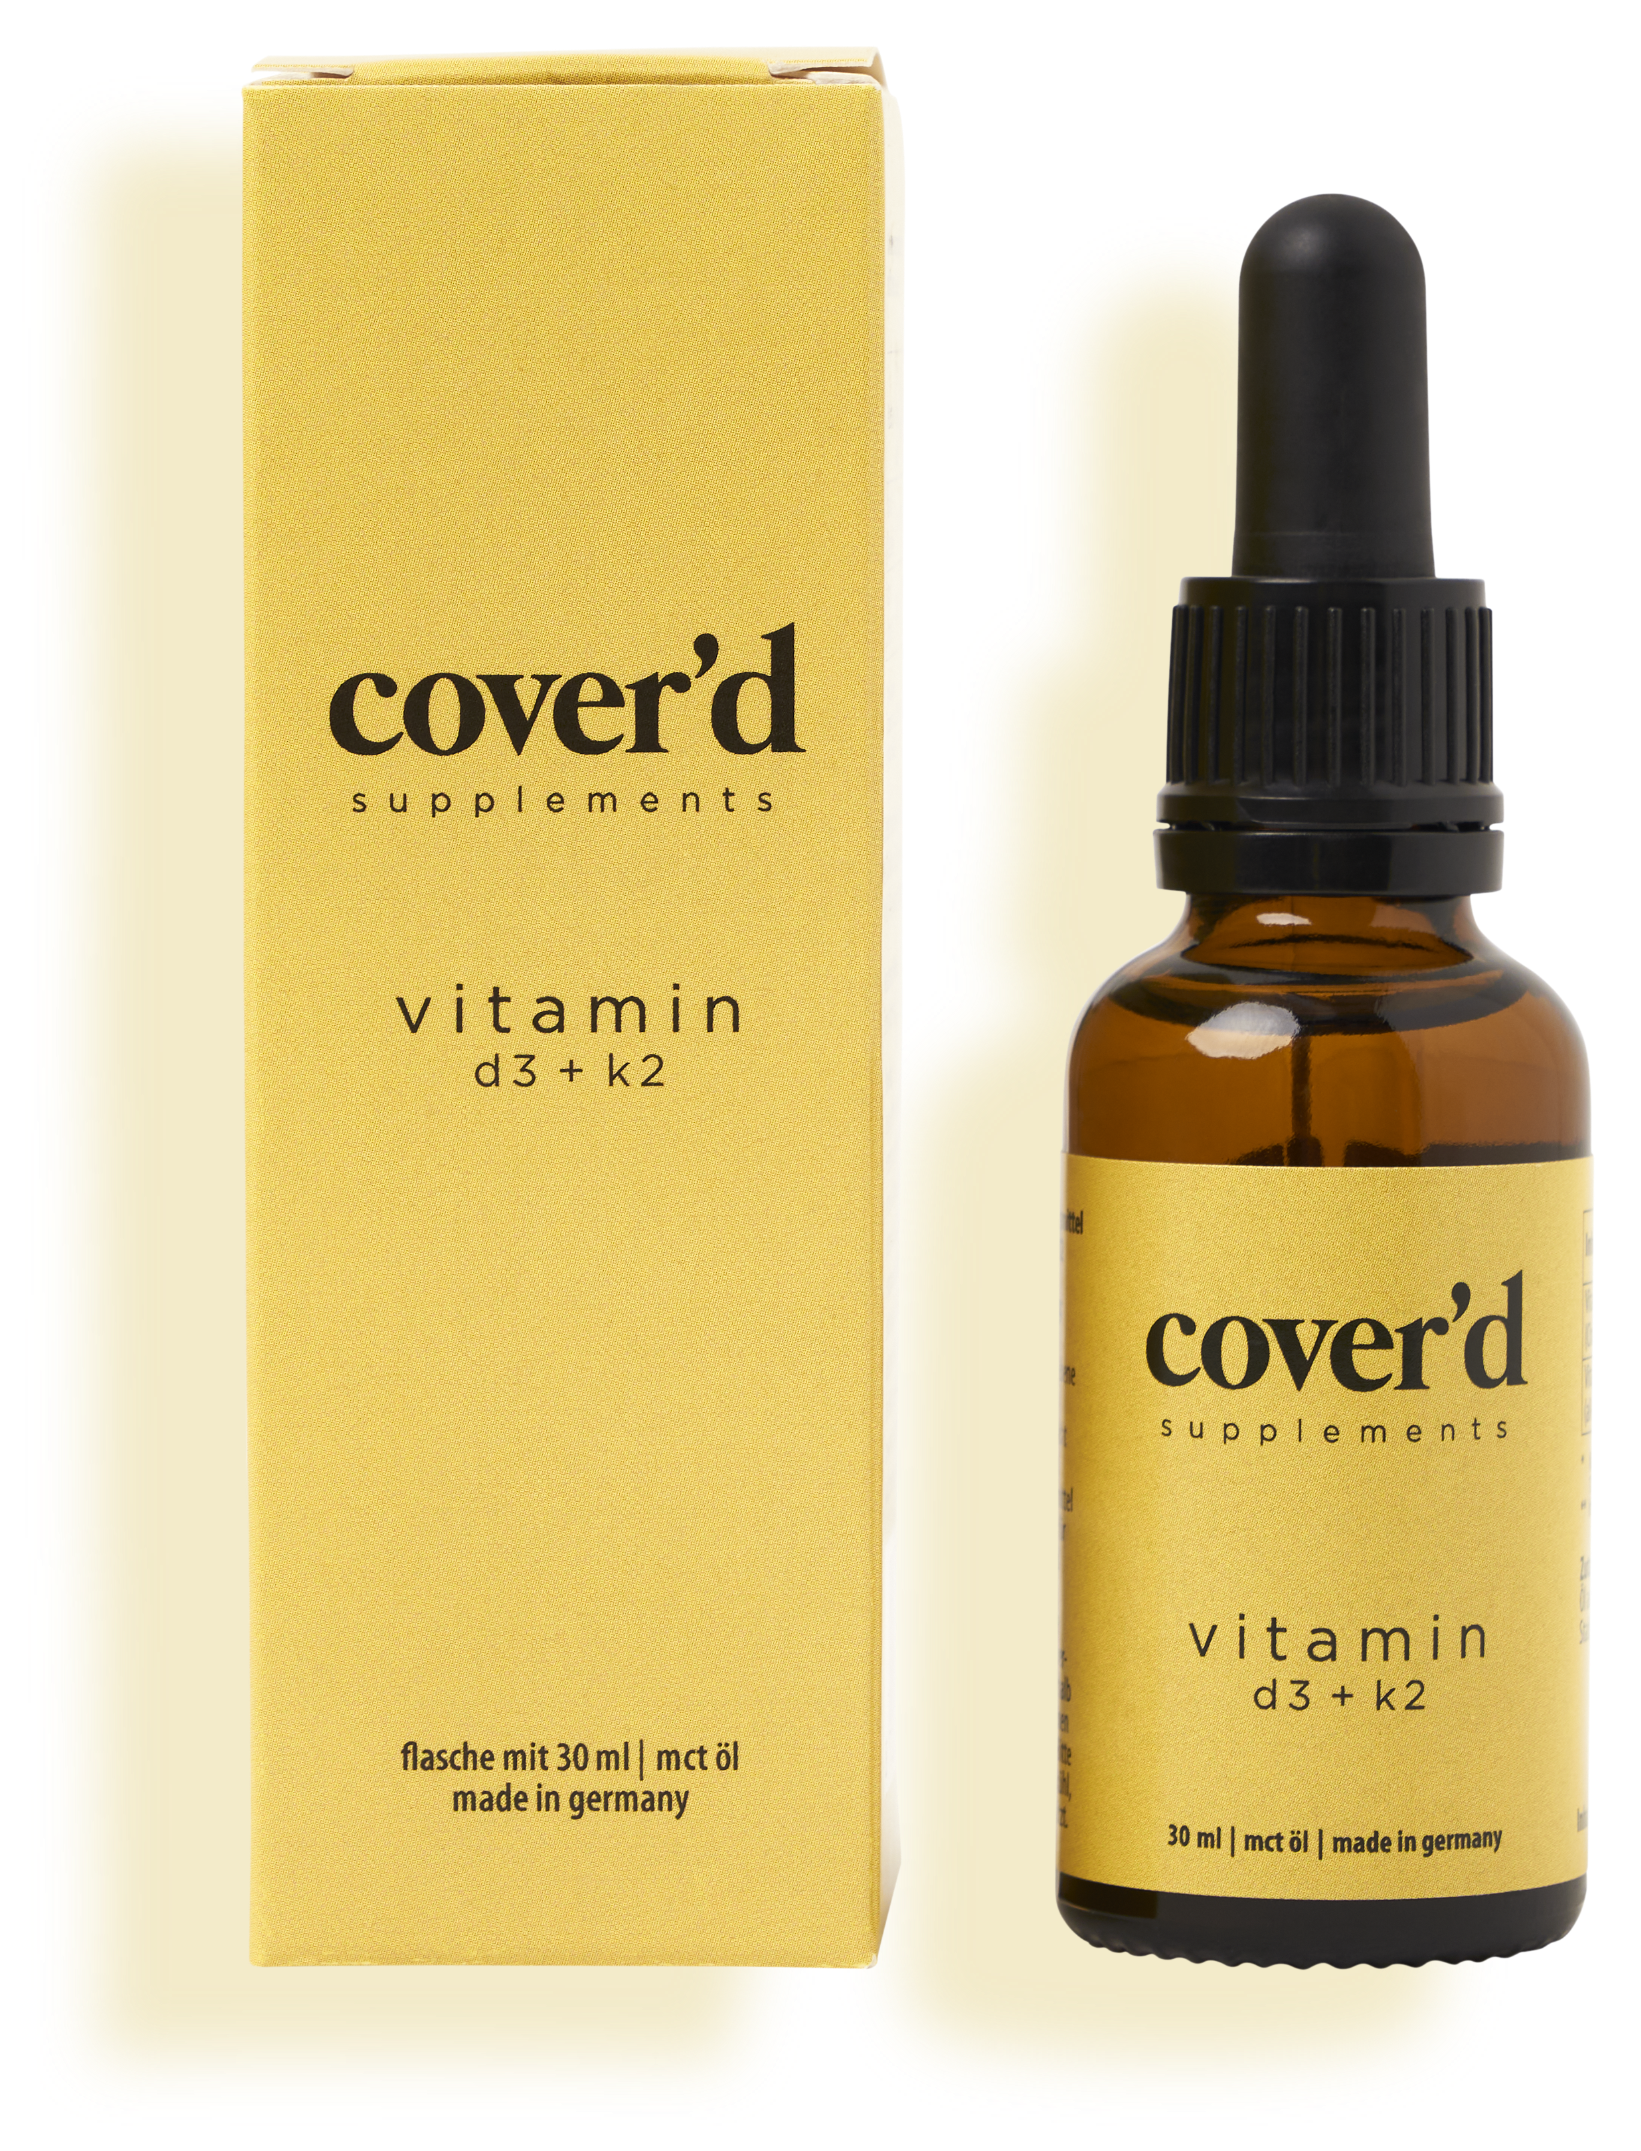 cover'd supplements Vitamin D3+K2 Flasche mit Pipette